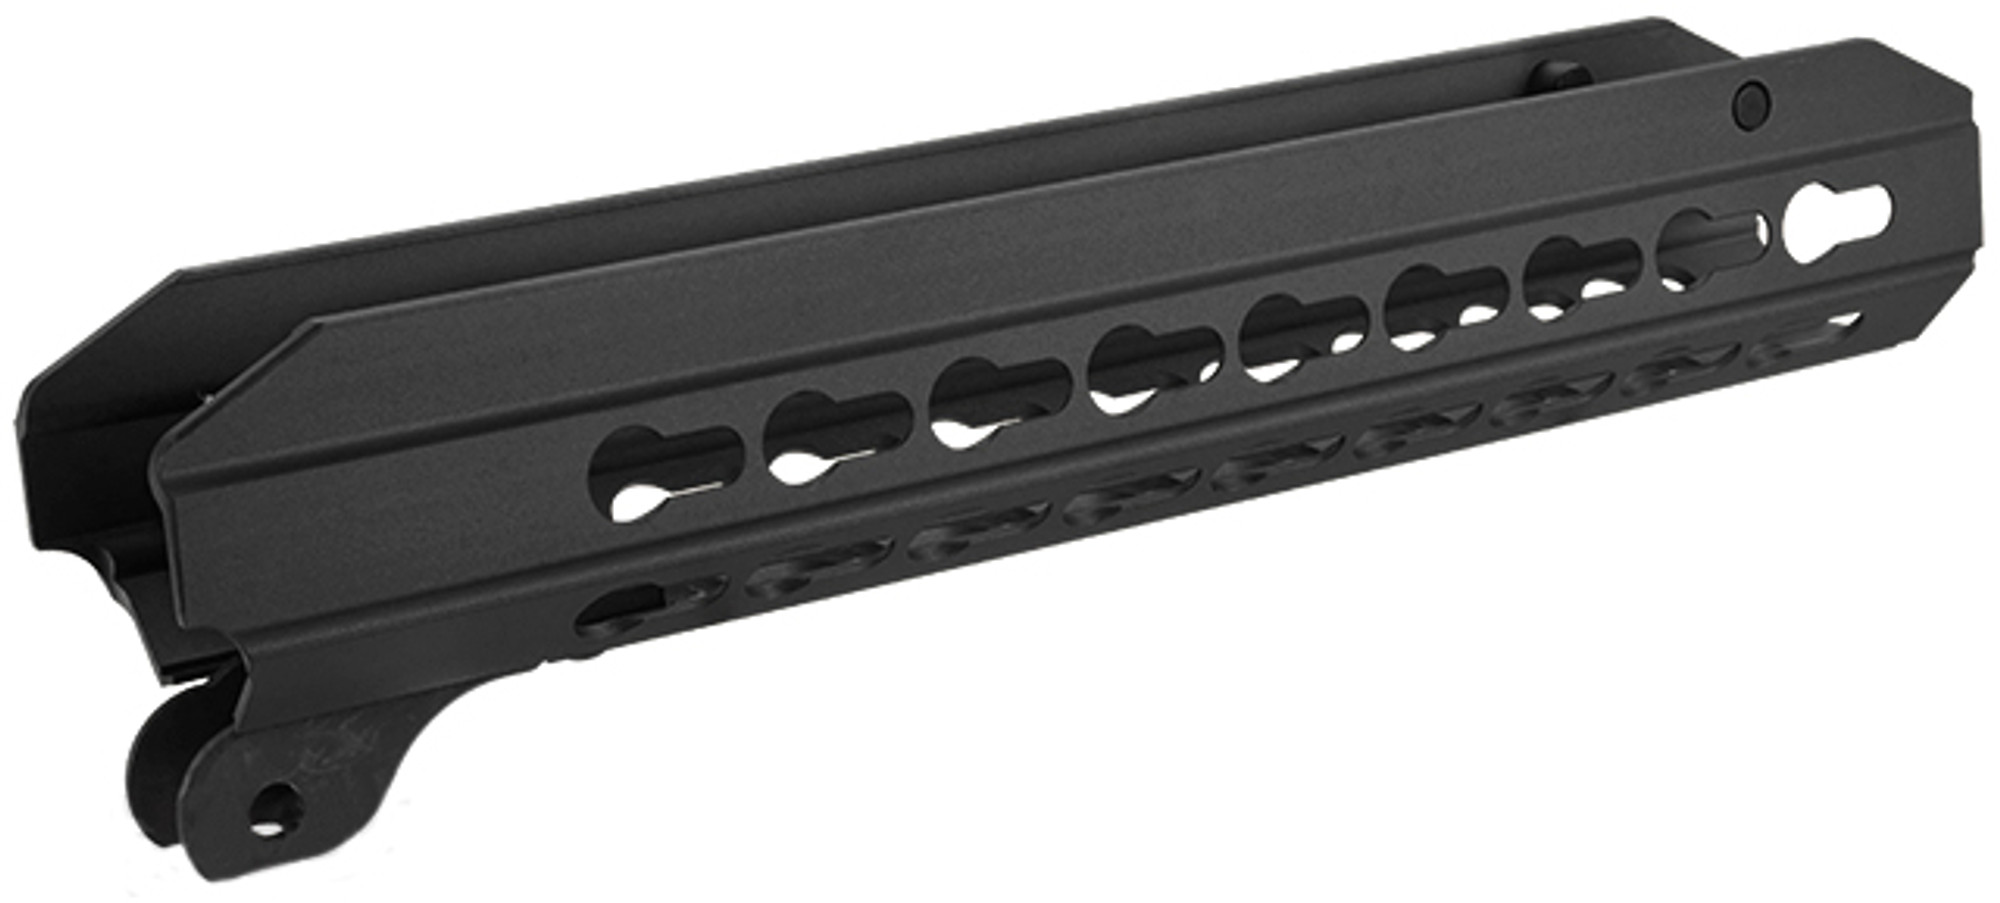 ICS OEM Replacement 9" KeyMod Hand Guard for CXP APE Series Airsoft AEG Rifles - Black